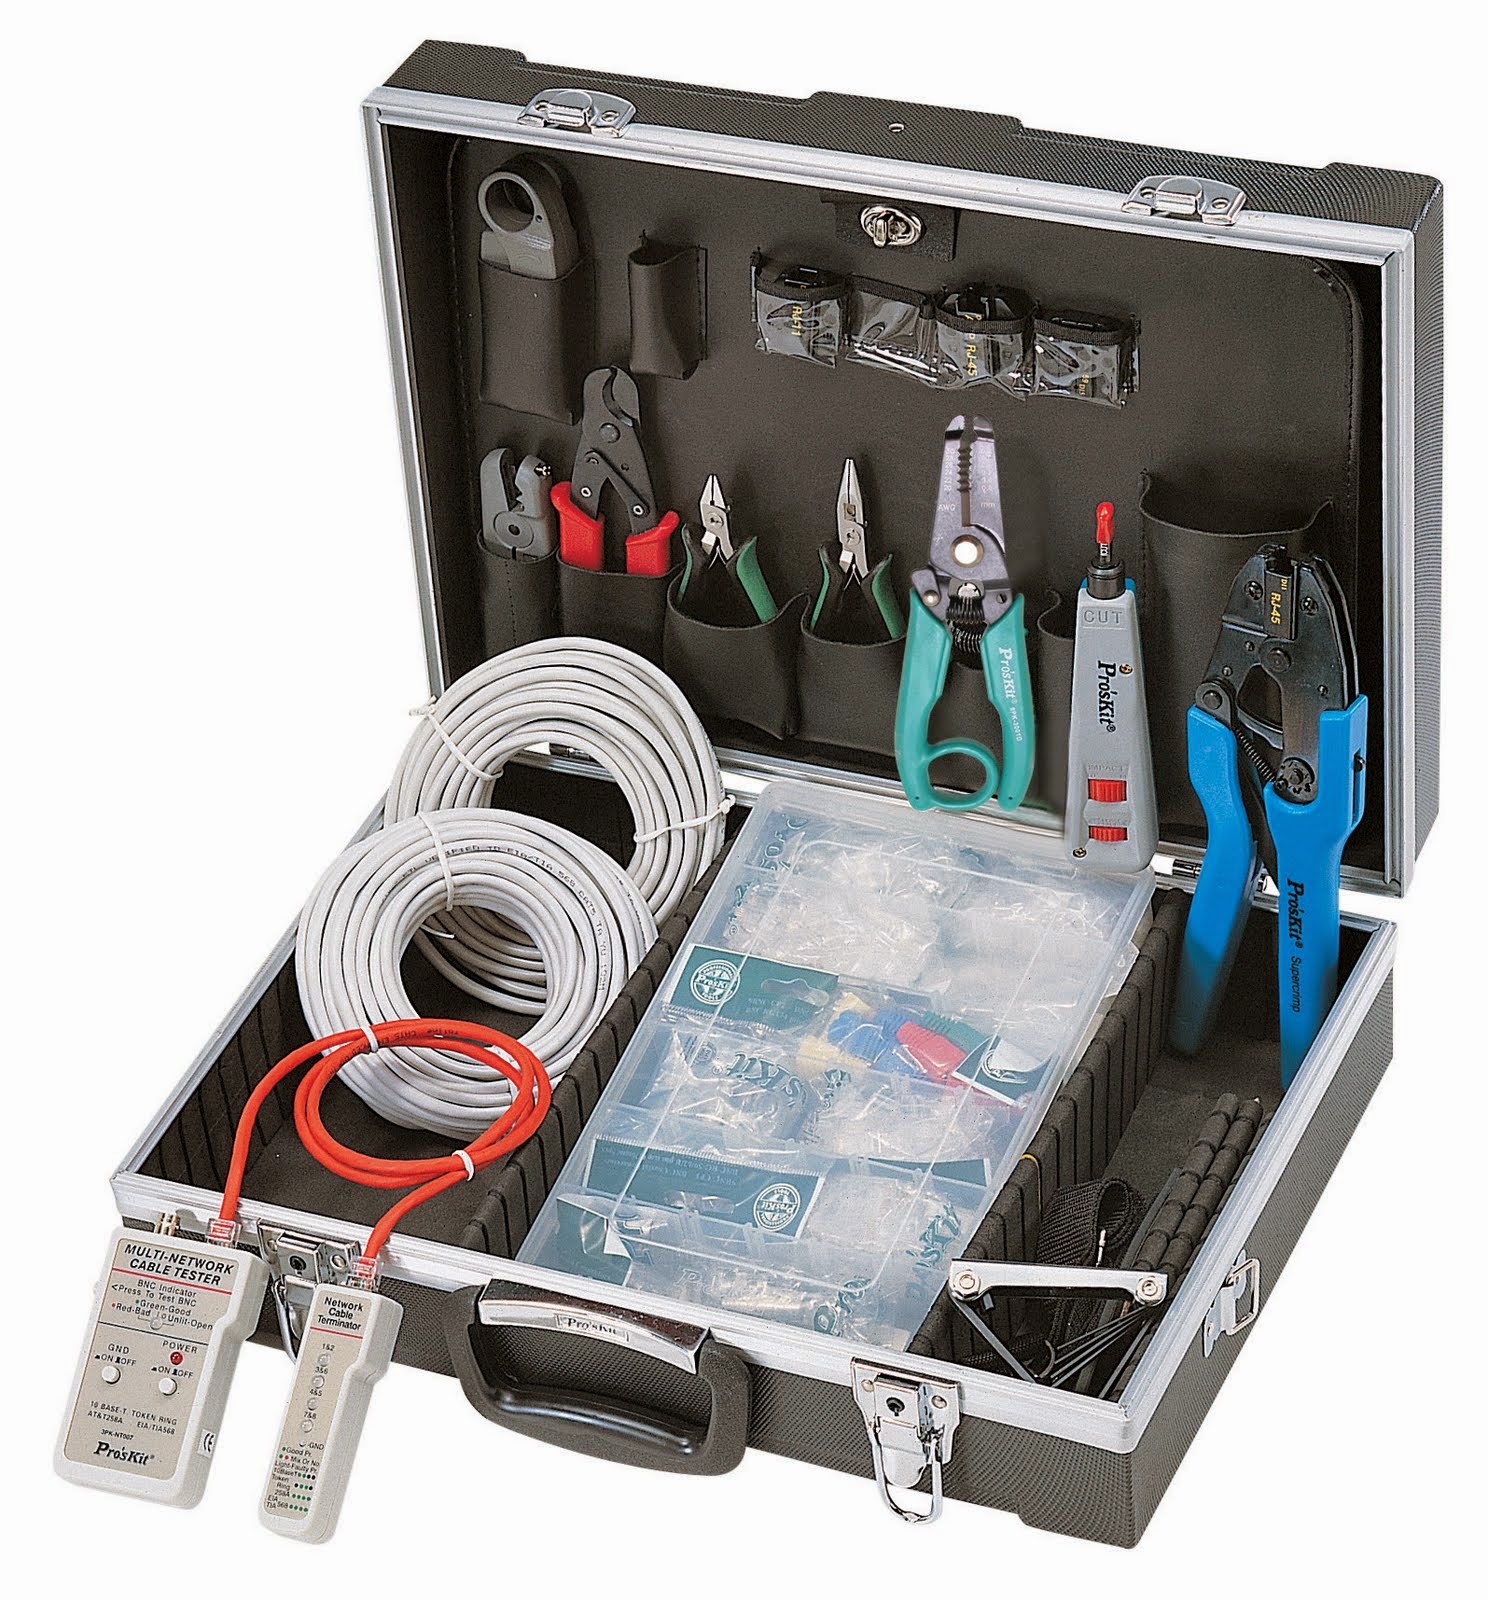 Install kits. Инструменты сетевой безопасности. Инструменты нетворкинга. Spc260b Deluxe Telco installer Tool Kit, Zipper Case. Installation Kit.